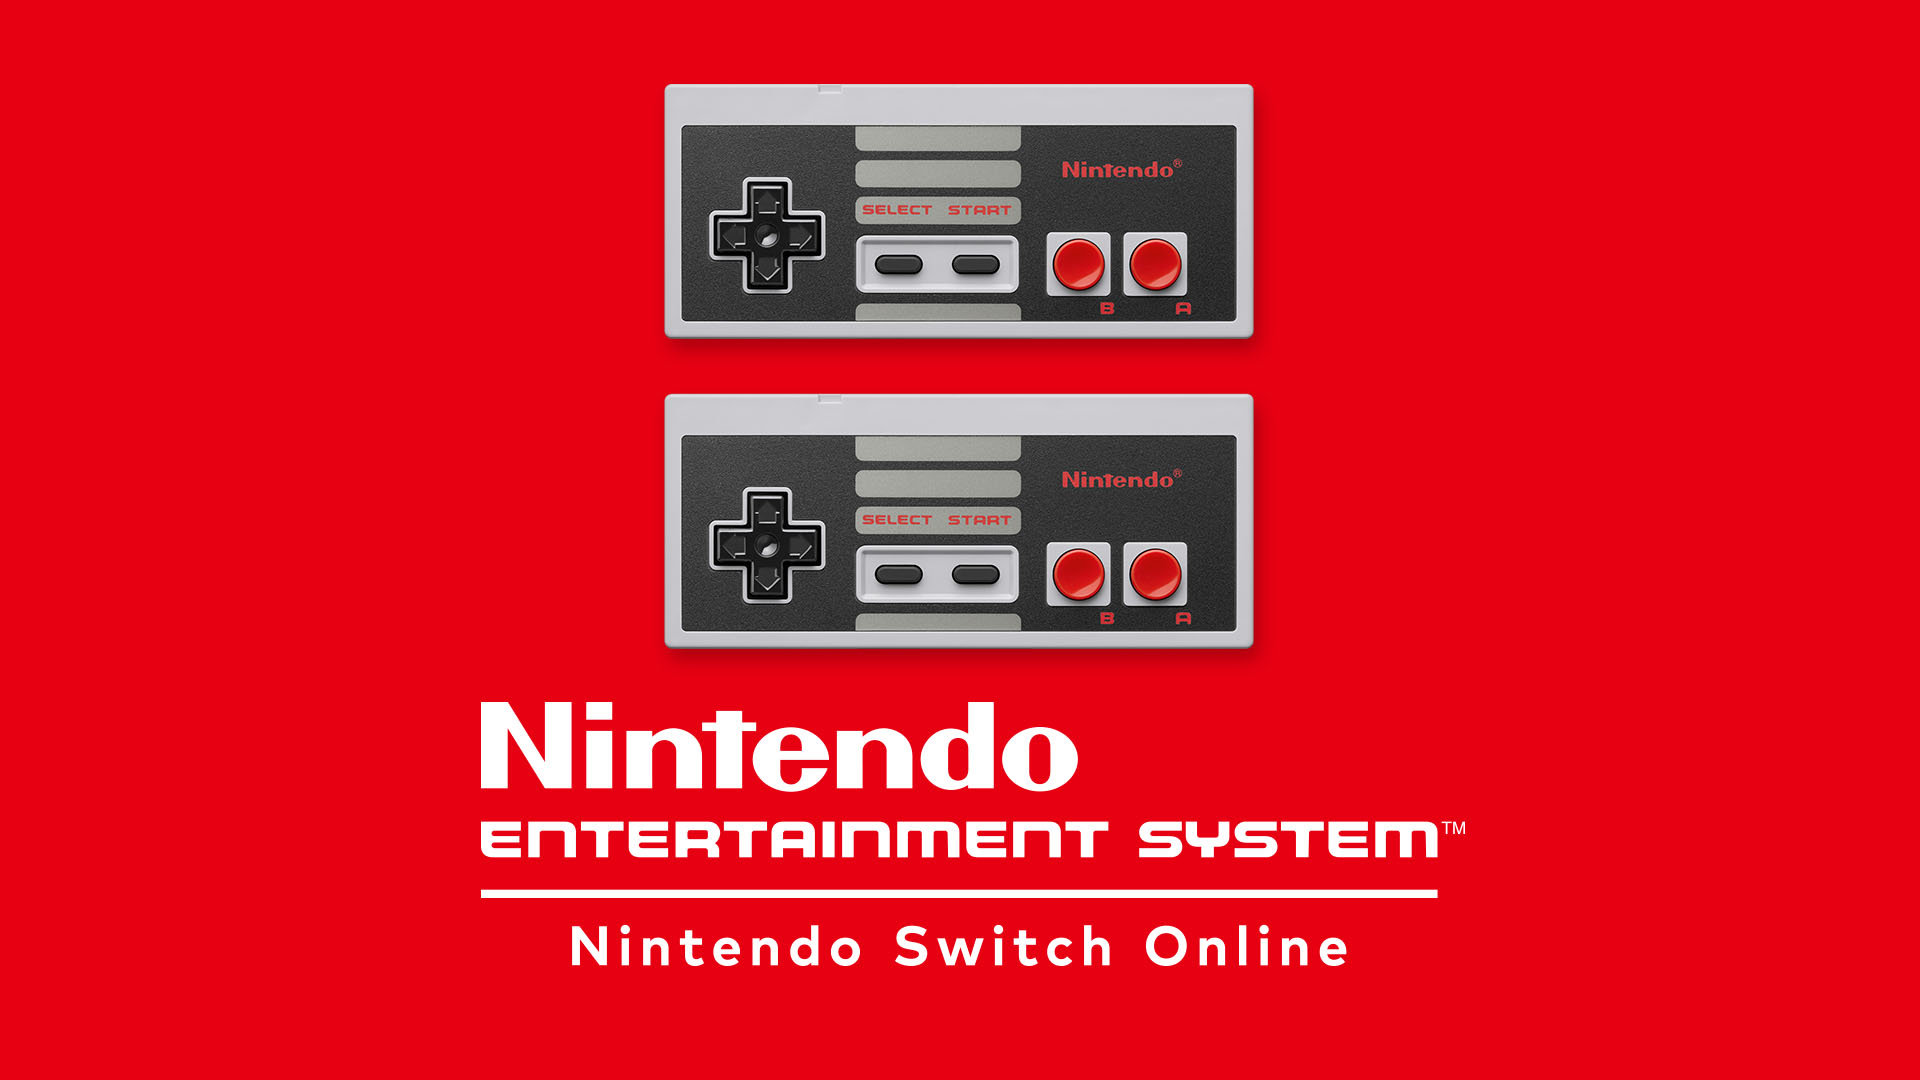 Nintendo Entertainment System™ - Nintendo Switch Online 1